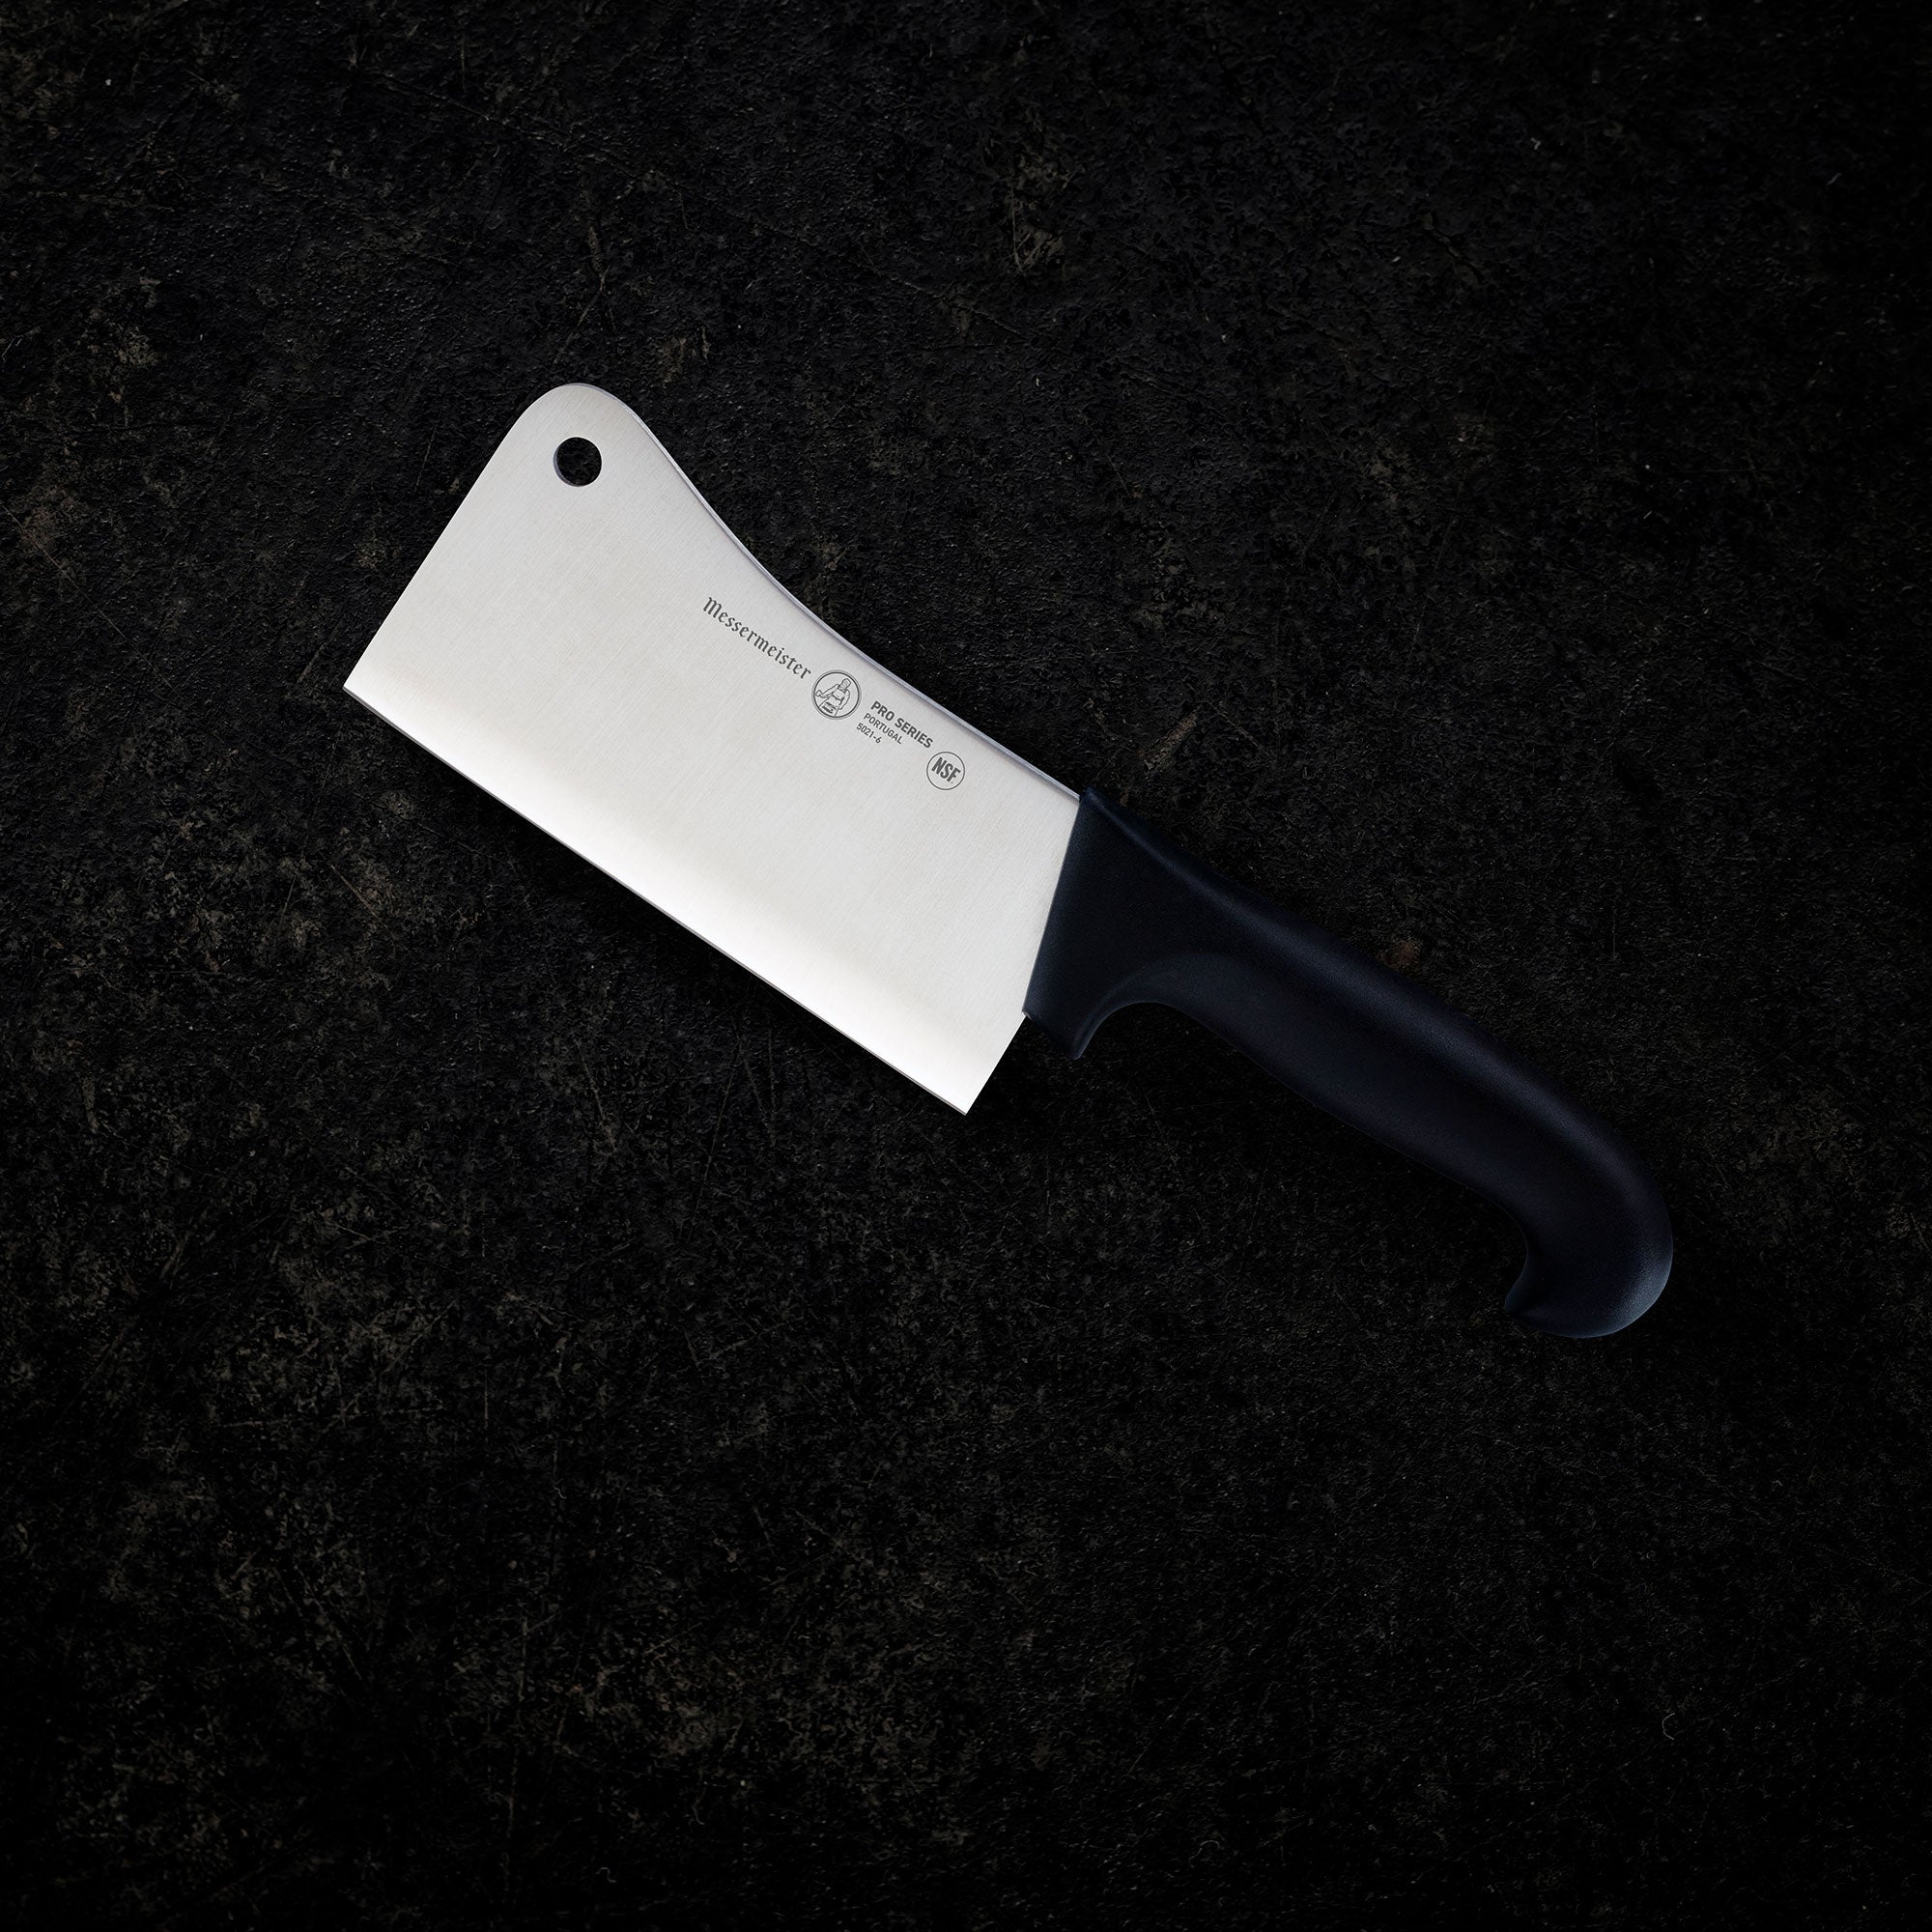 Butcher Knife vs. Cleaver: Which Should I Buy?